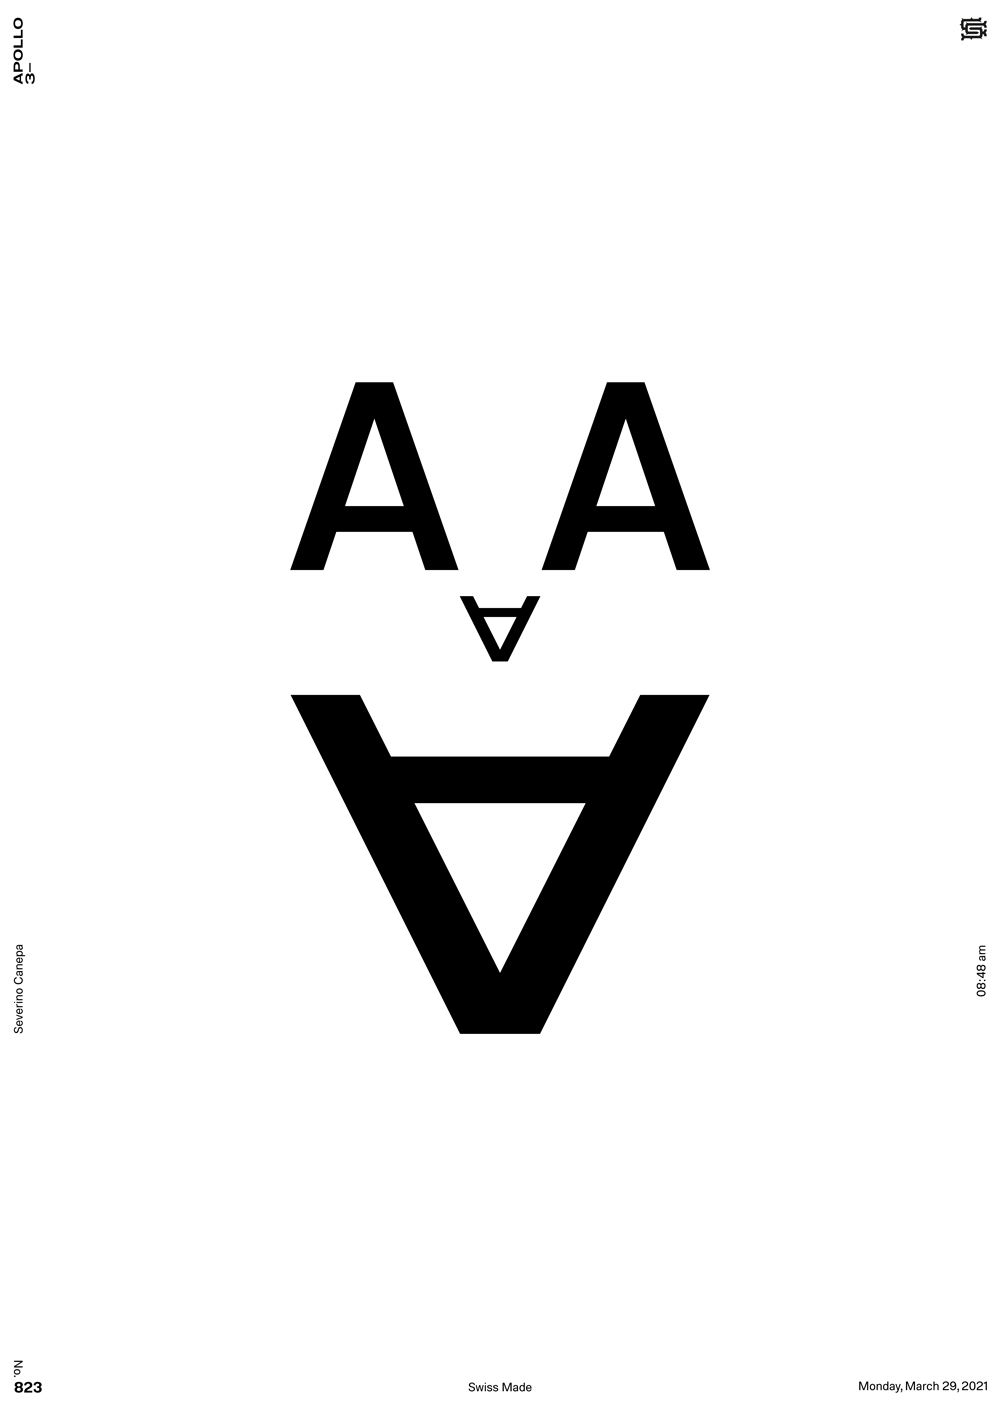 Minimalist design where I use letters to create a face